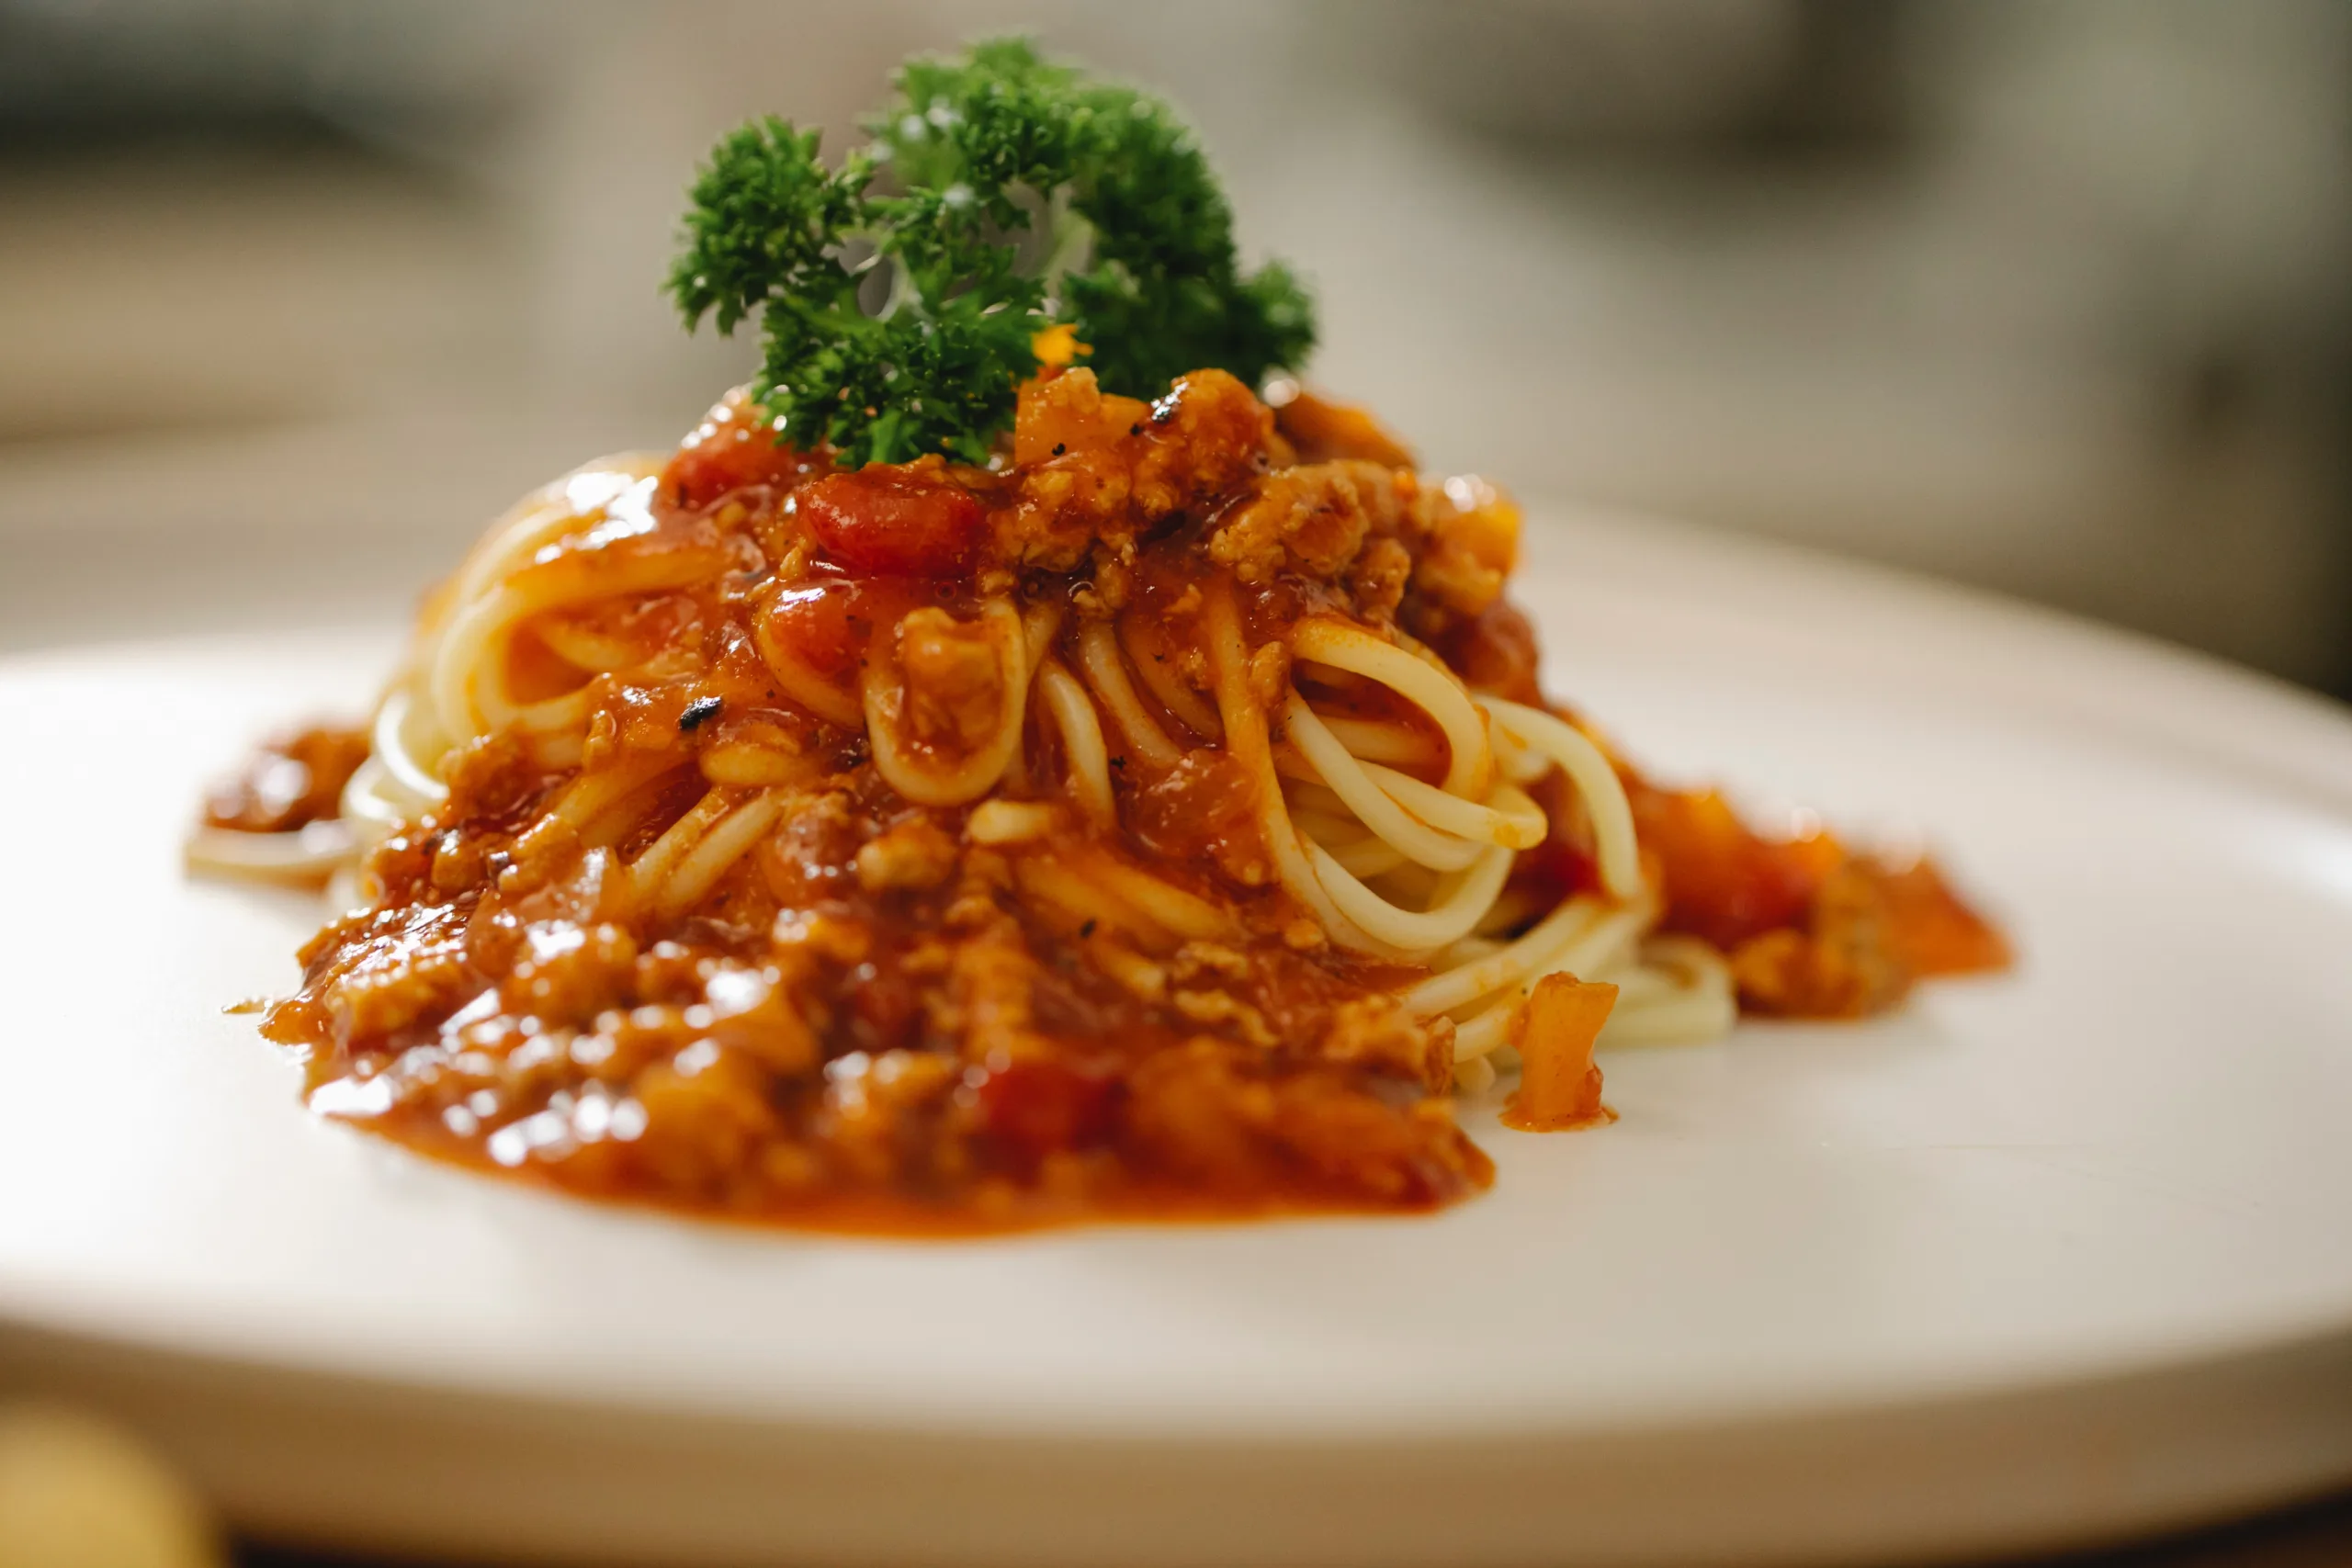 Classic Mediterranean dish of al dente spaghetti served in a savory tomato-based sauce